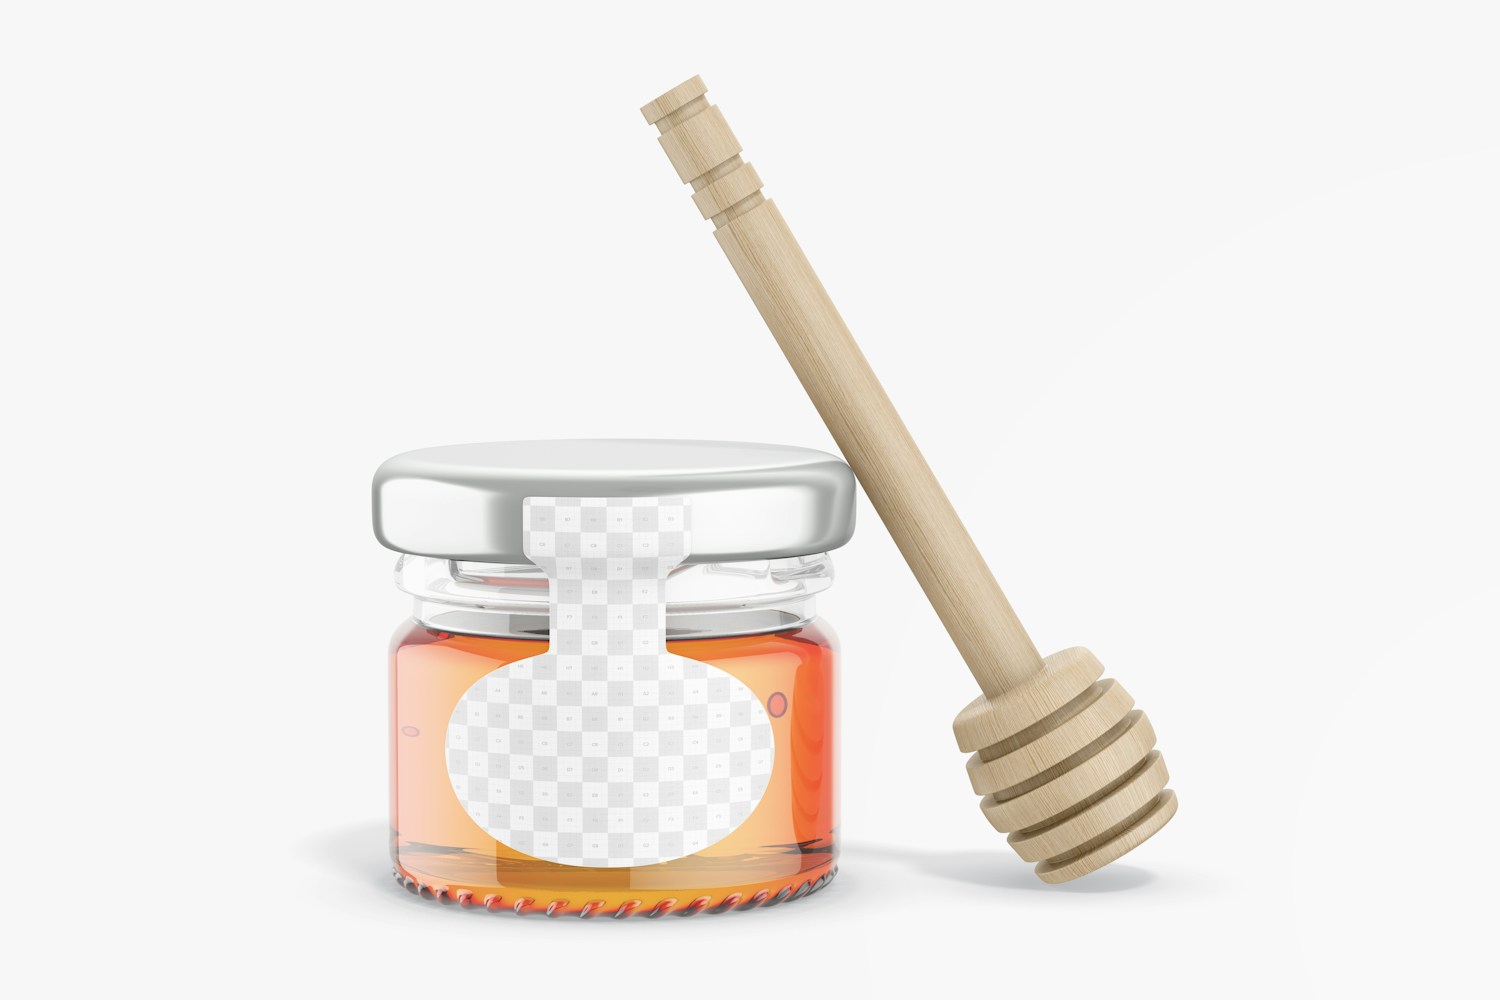 Clear Honey Jar Mockup 02